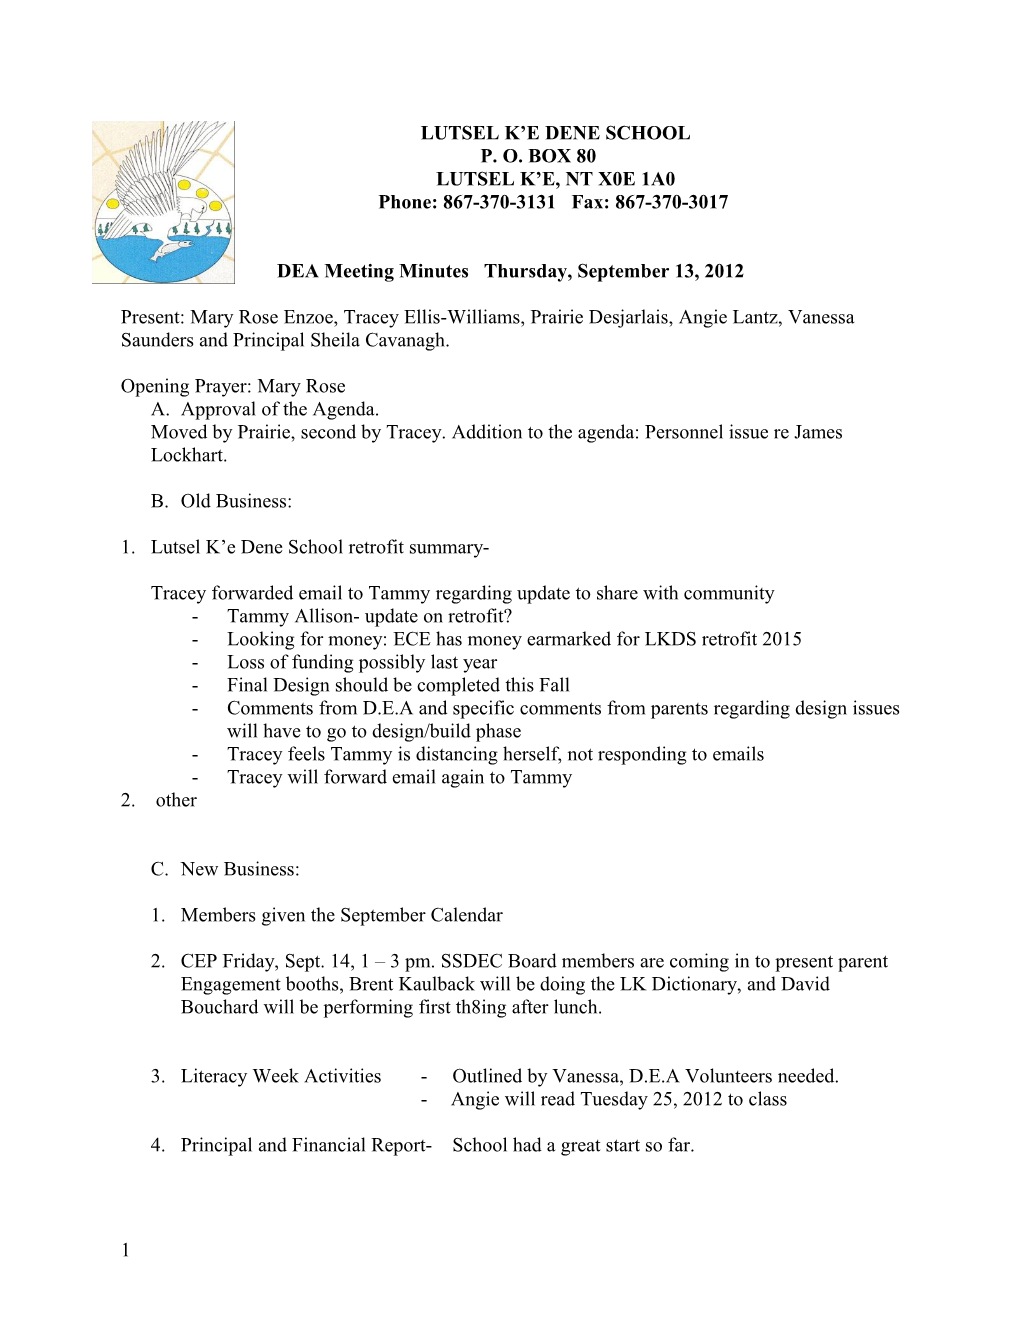 DEA Meeting Minutes Thursday, September 13, 2012